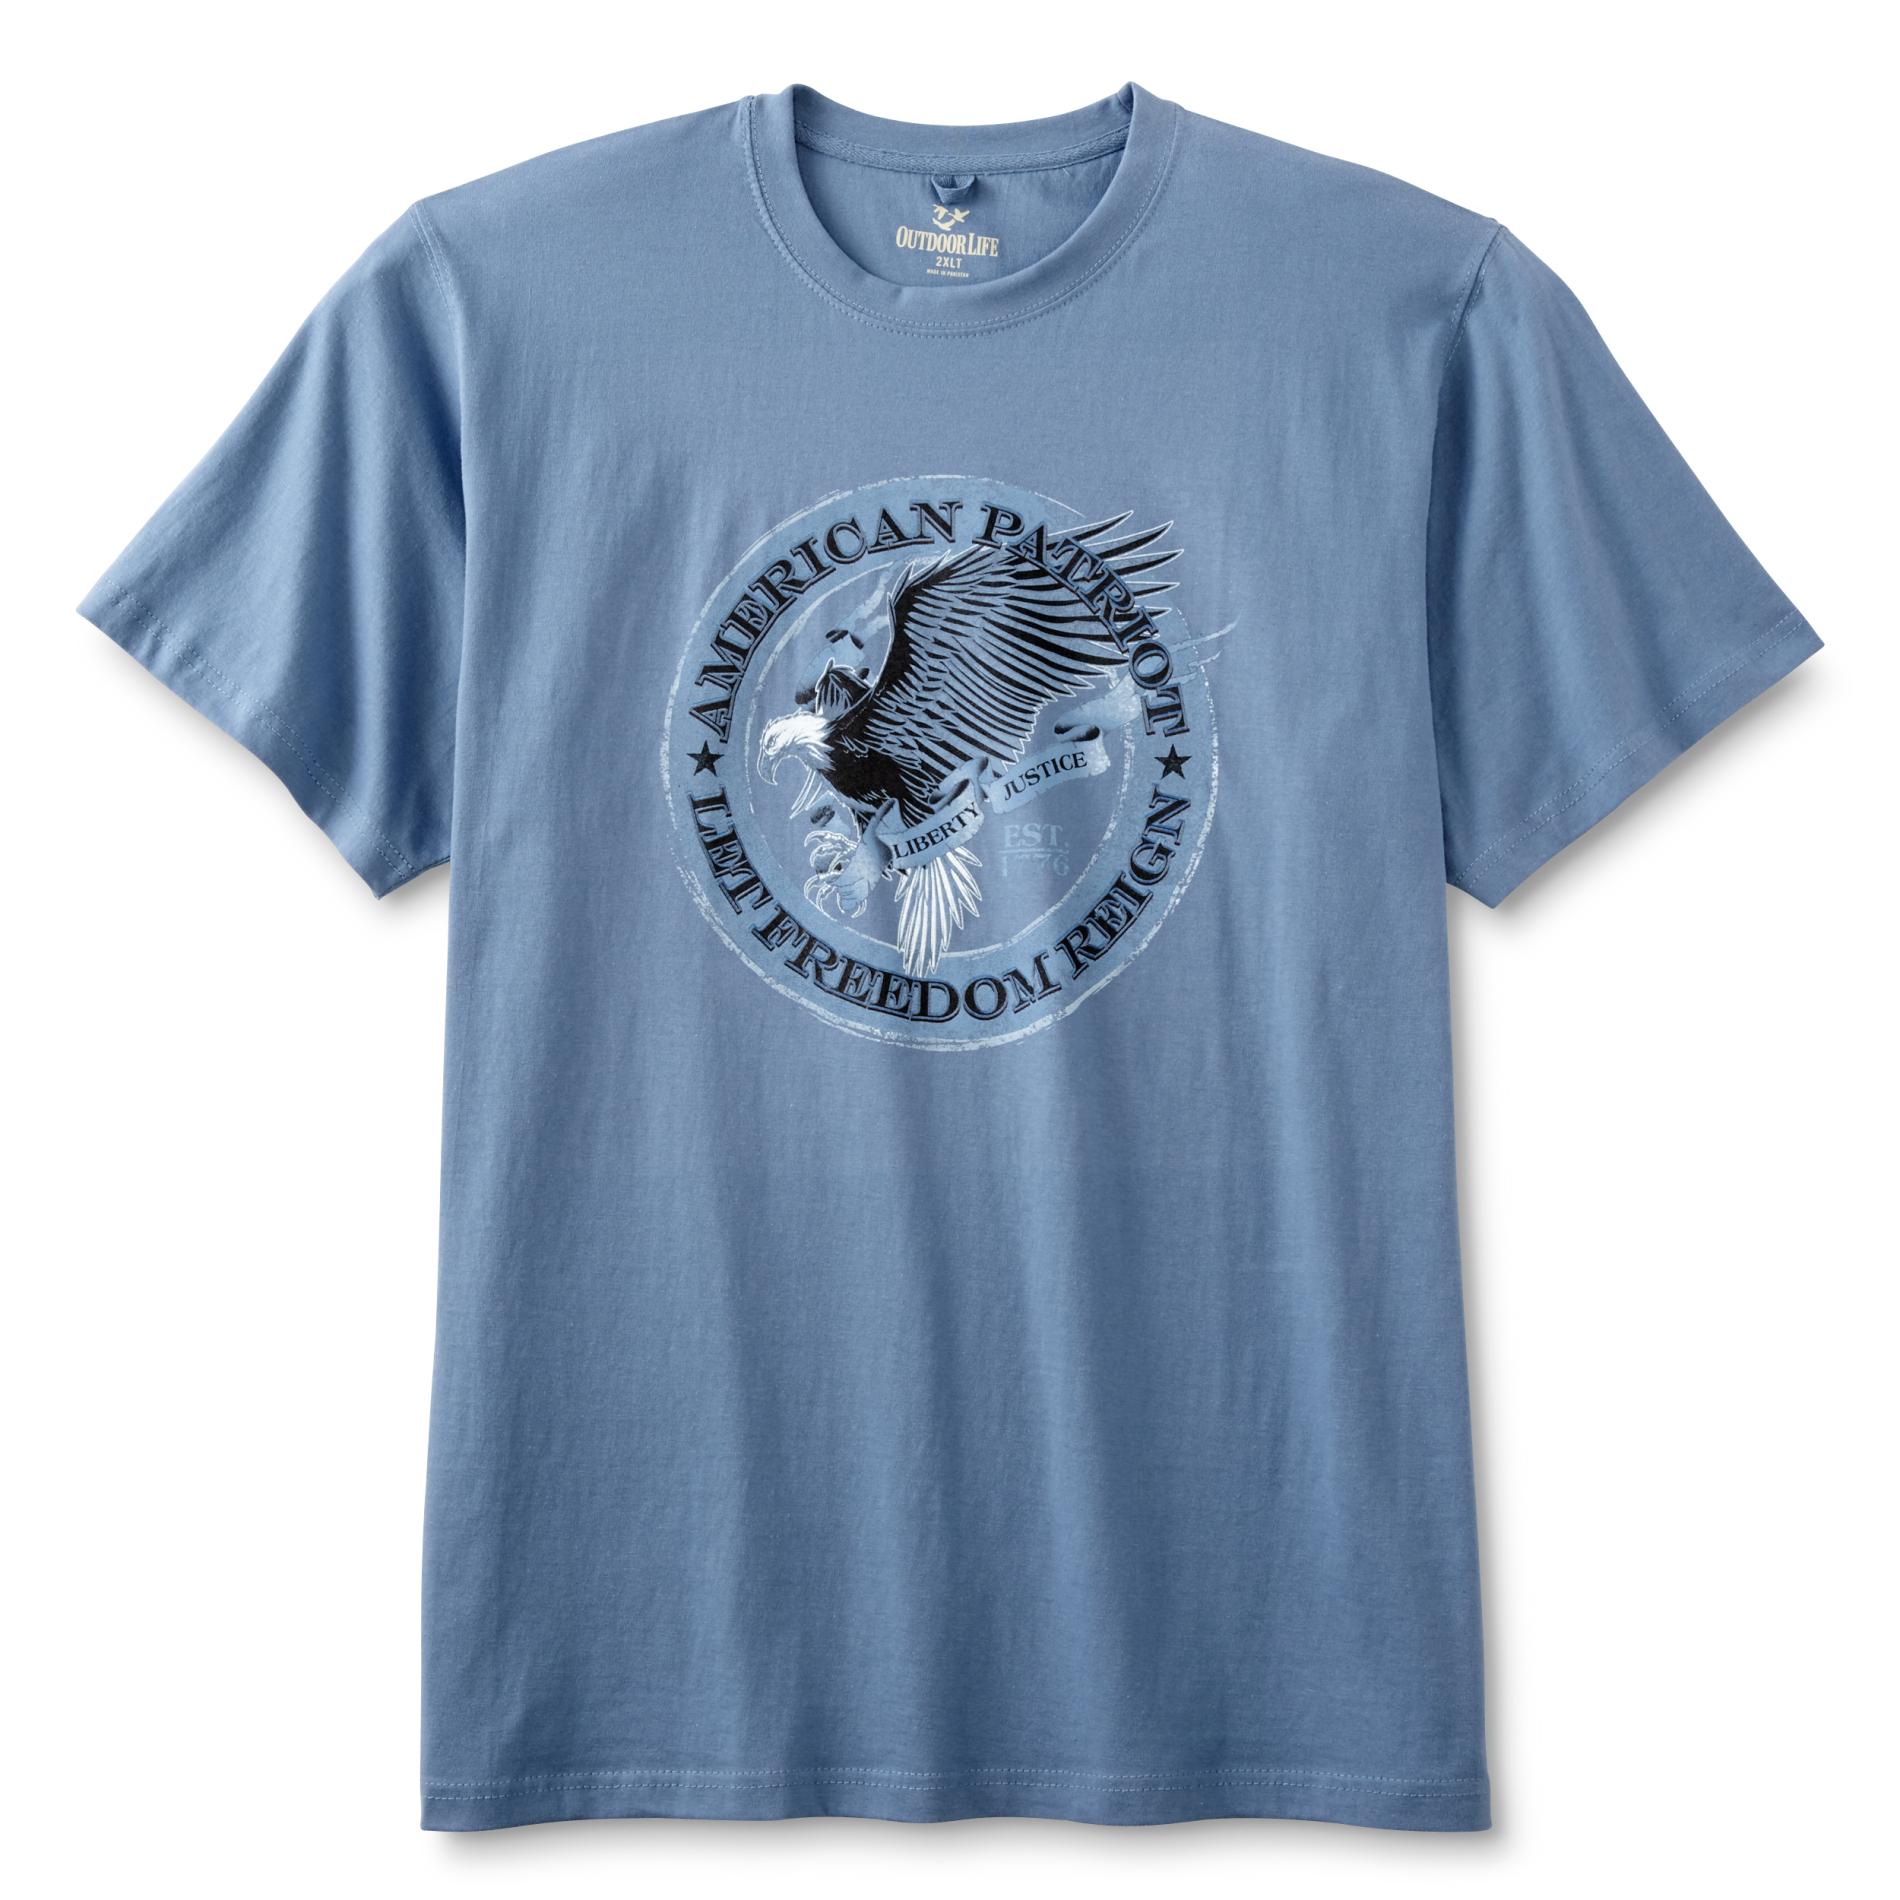 Outdoor Life Men's Big & Tall Graphic T-Shirt - Eagle